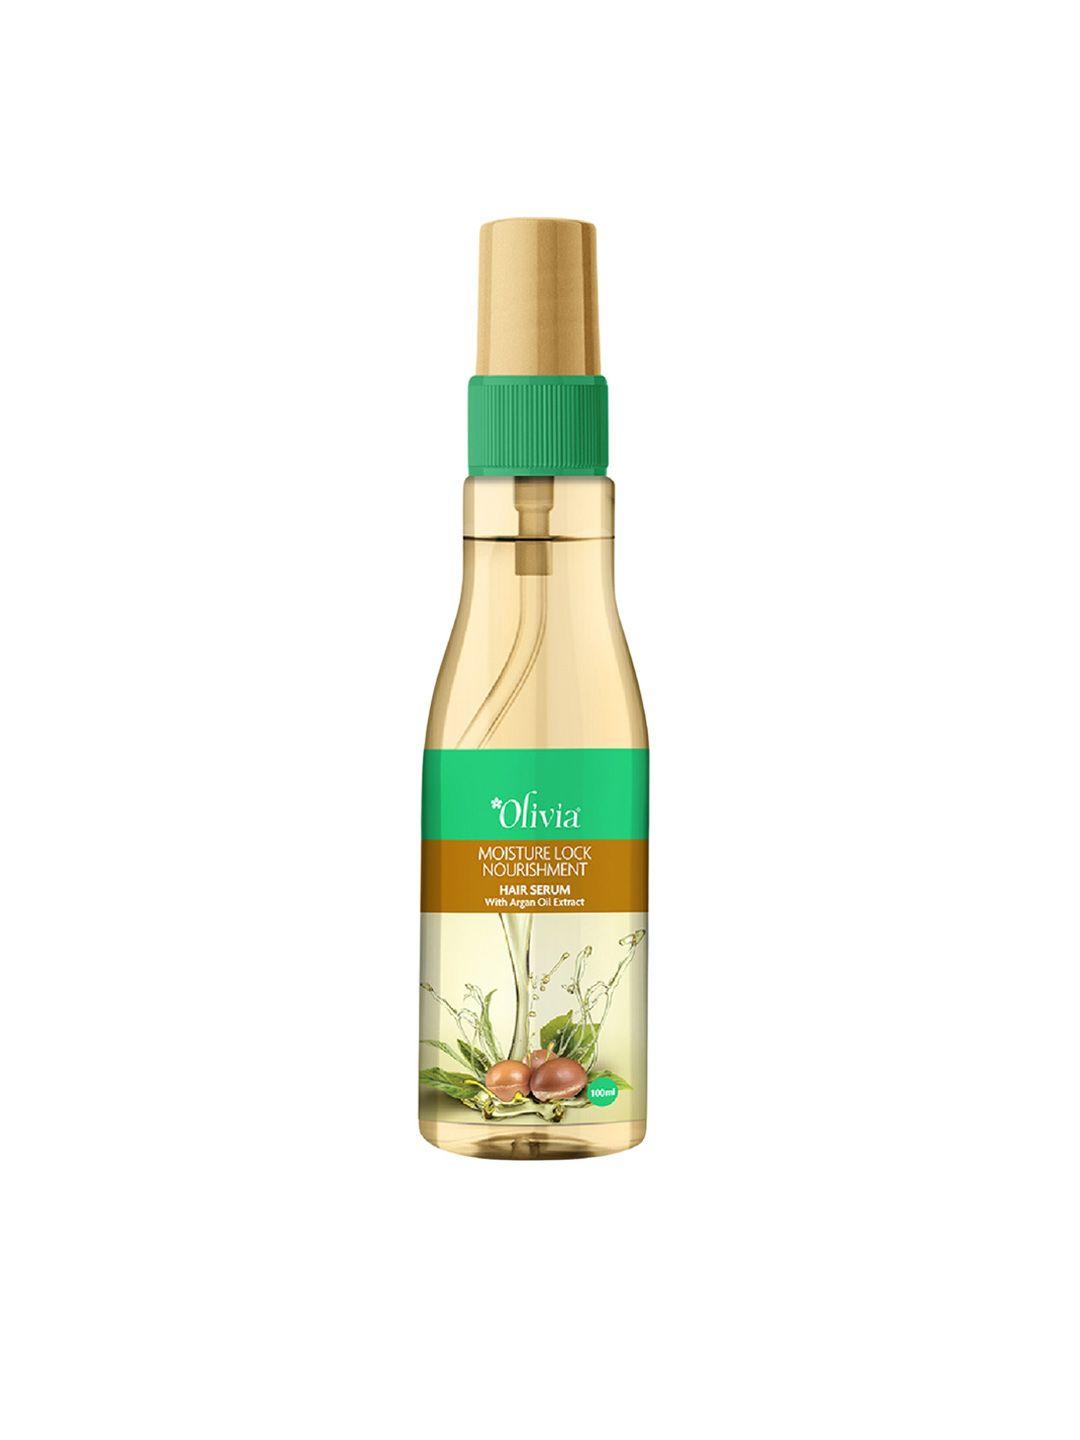 olivia moisture lock nourishment hair serum with argan oil extract - 100ml